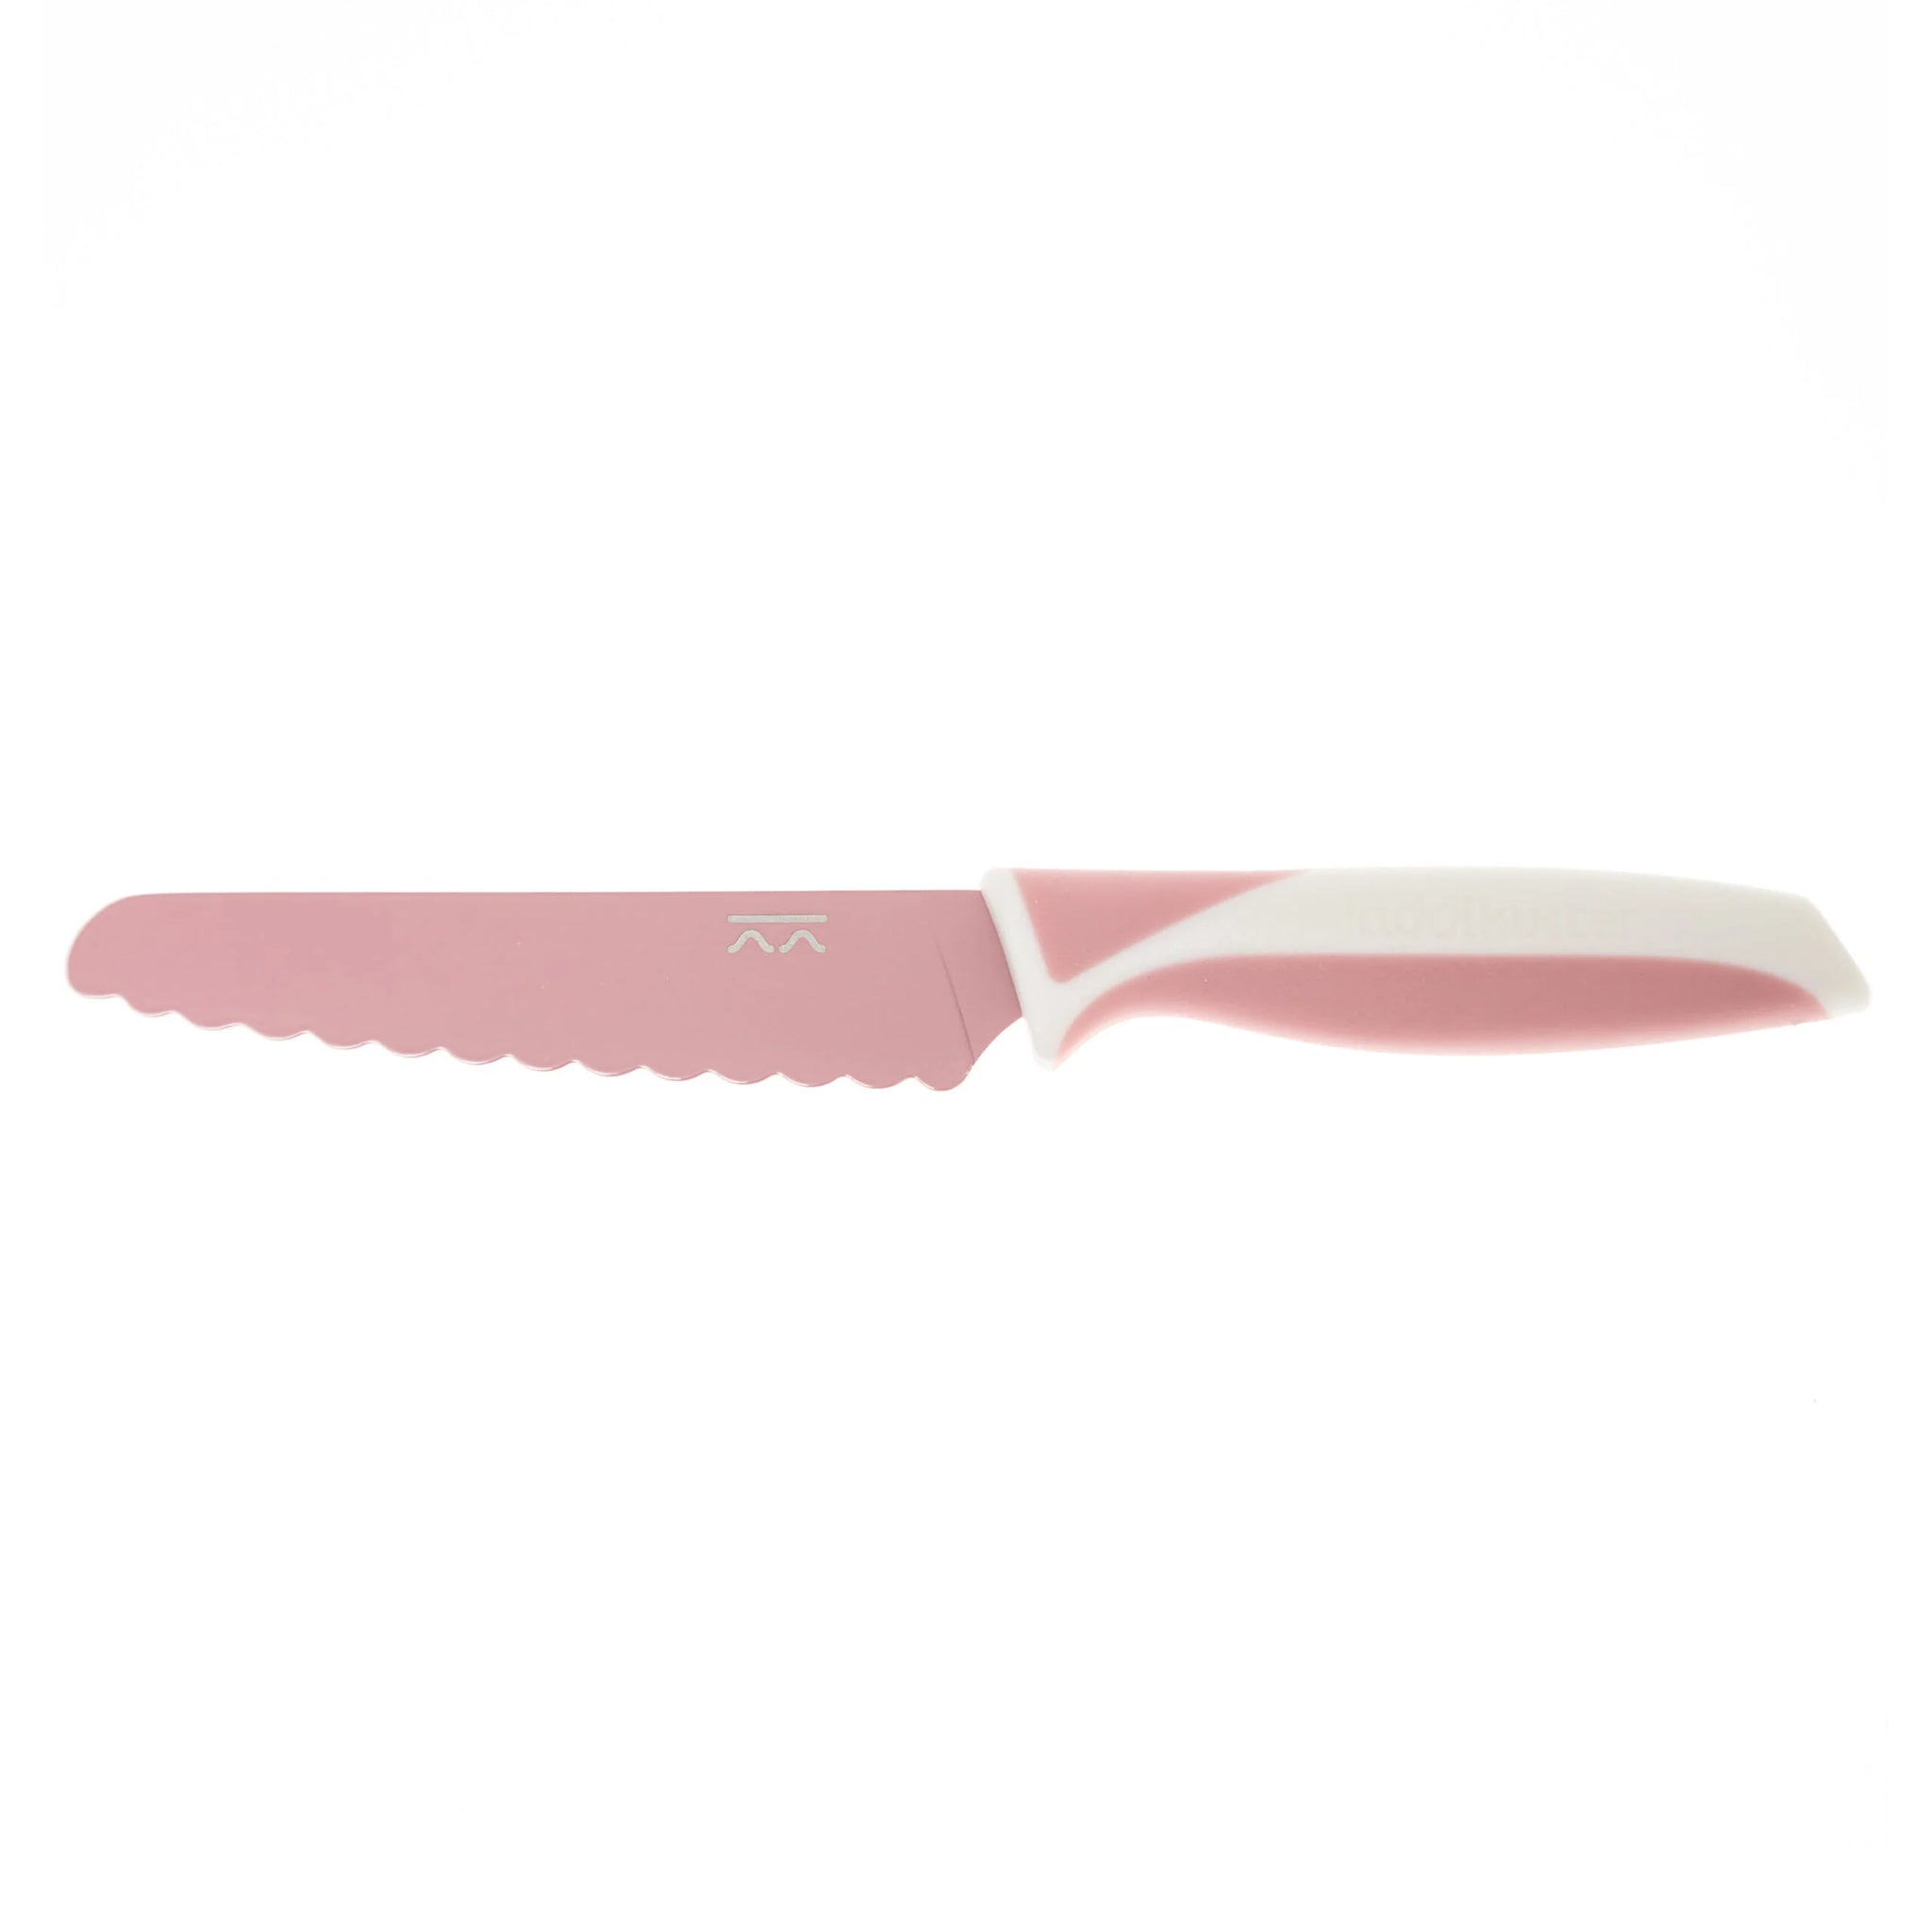 KiddiKutter Kid Safe Knife - Blush Pink